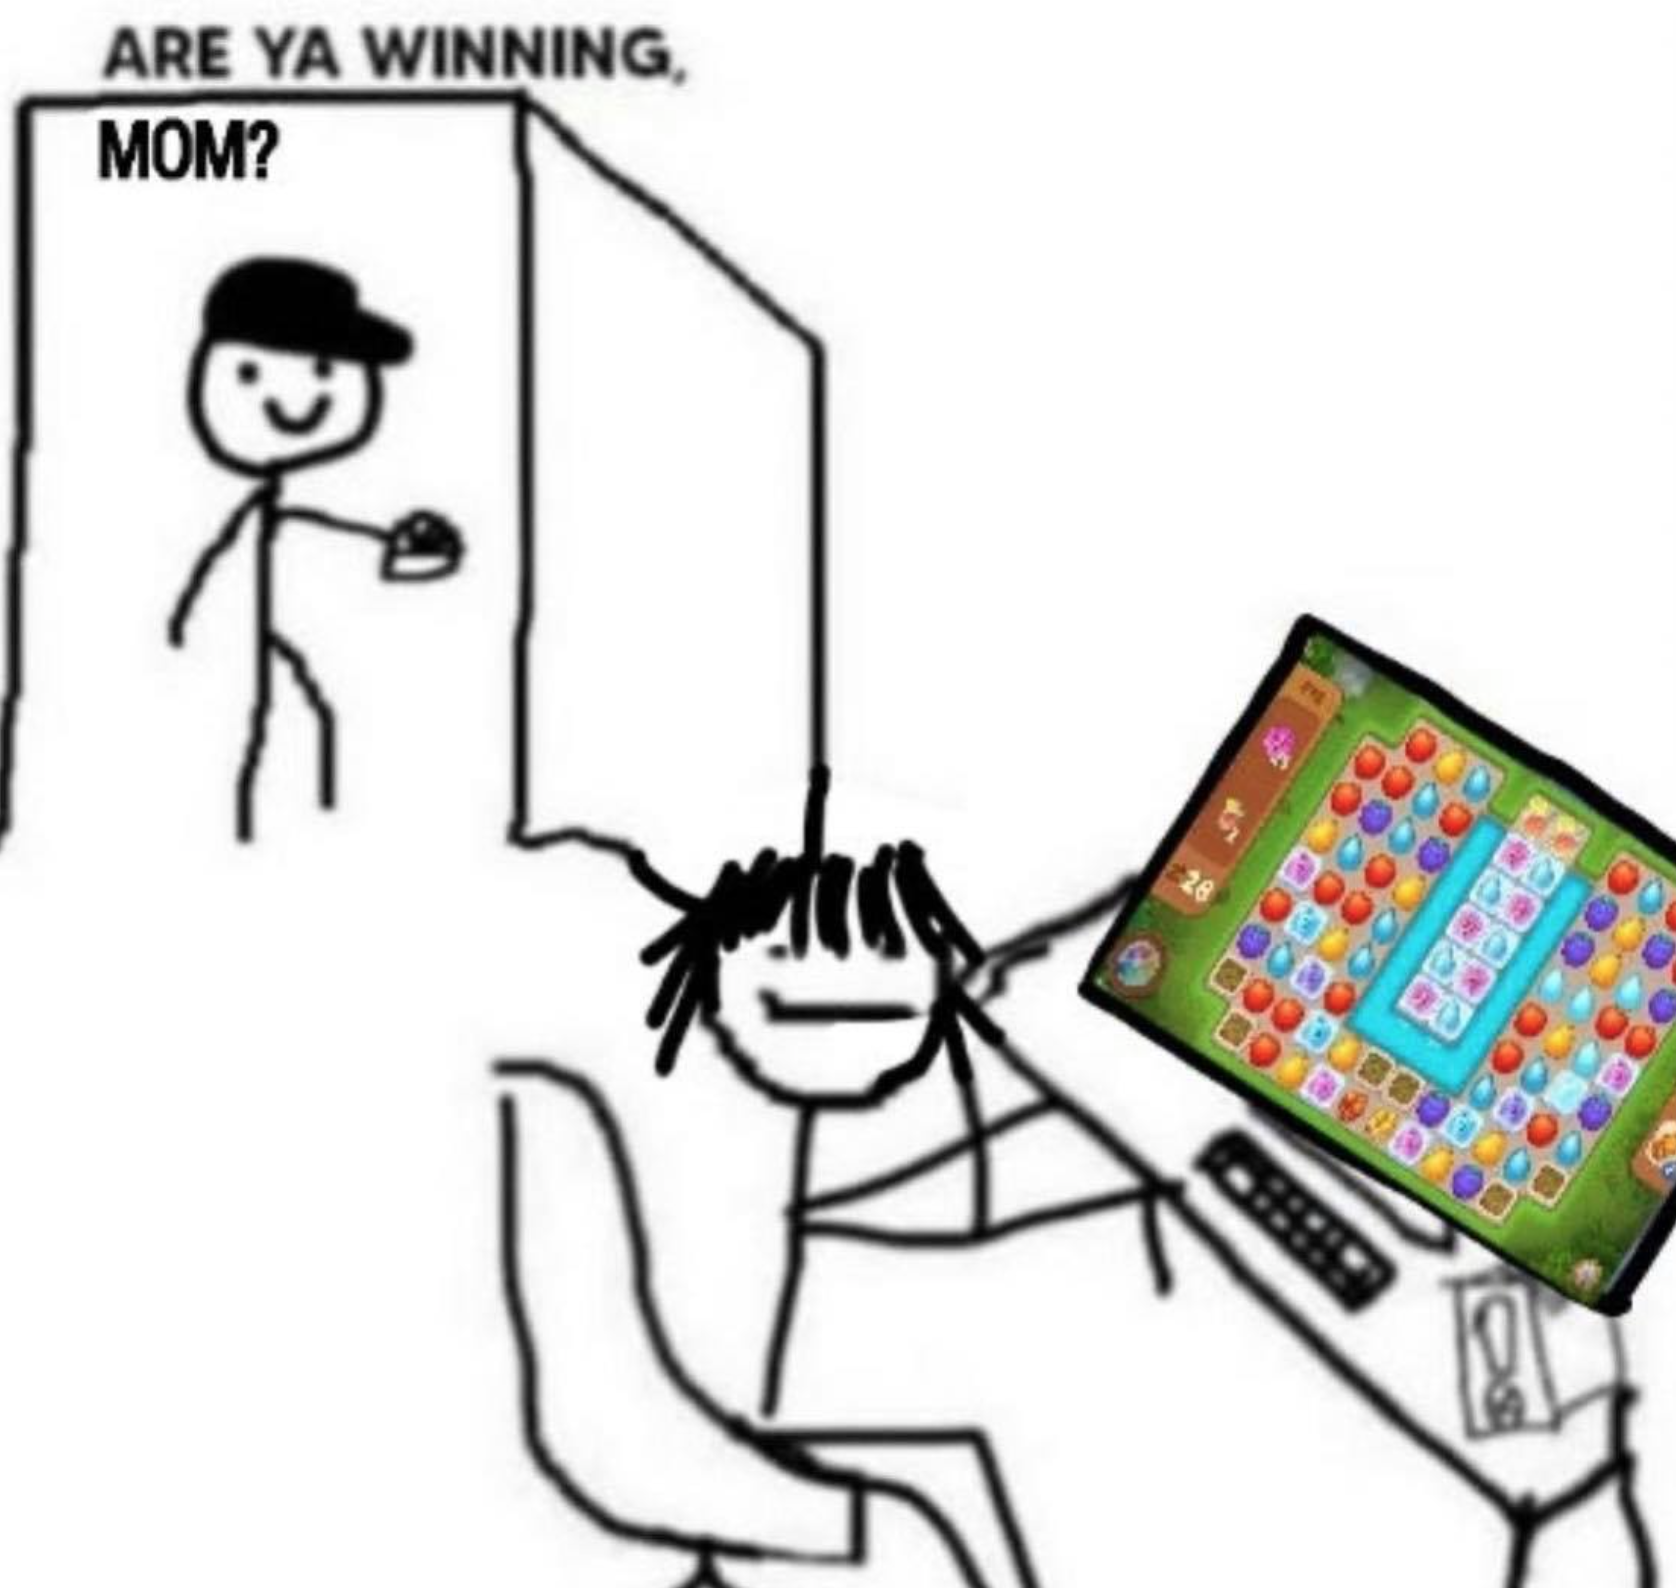 gaming memes - you winning mom meme - Are Ya Winning, Mom?